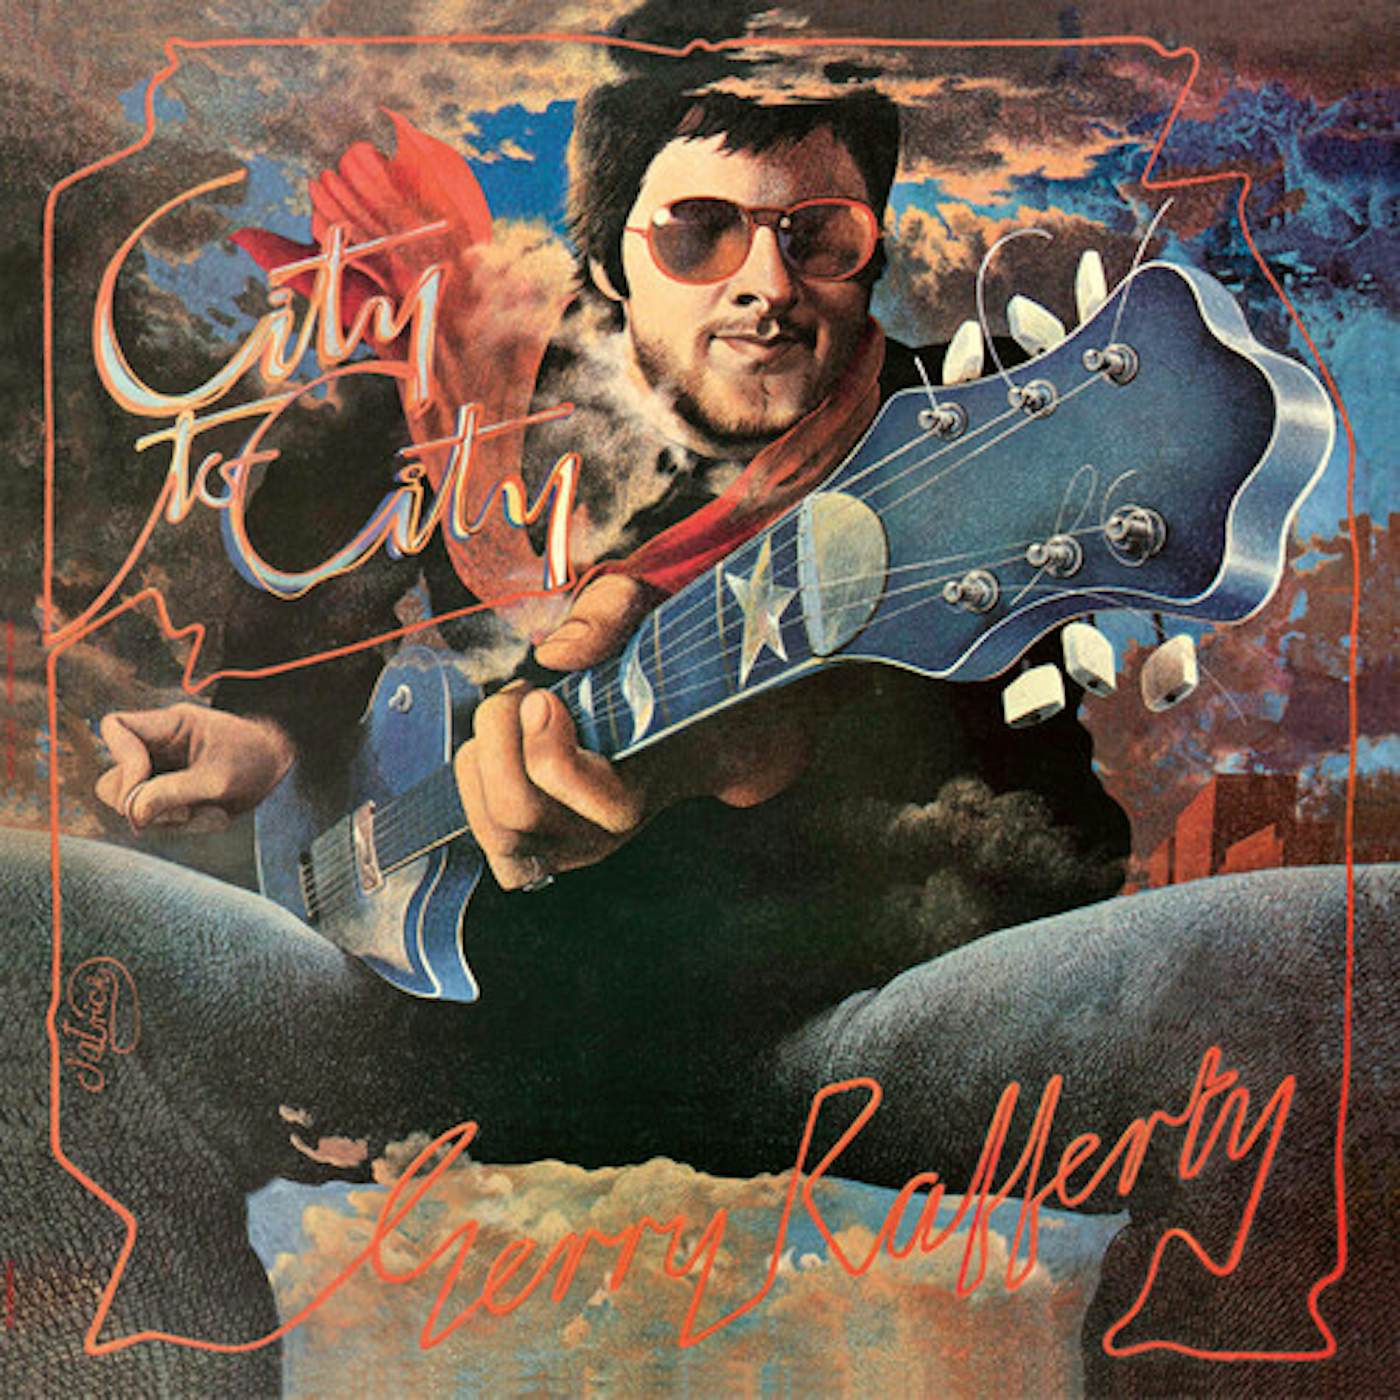 Gerry Rafferty City To City (2LP/)2022 Remaster) (Syeor) Vinyl Record